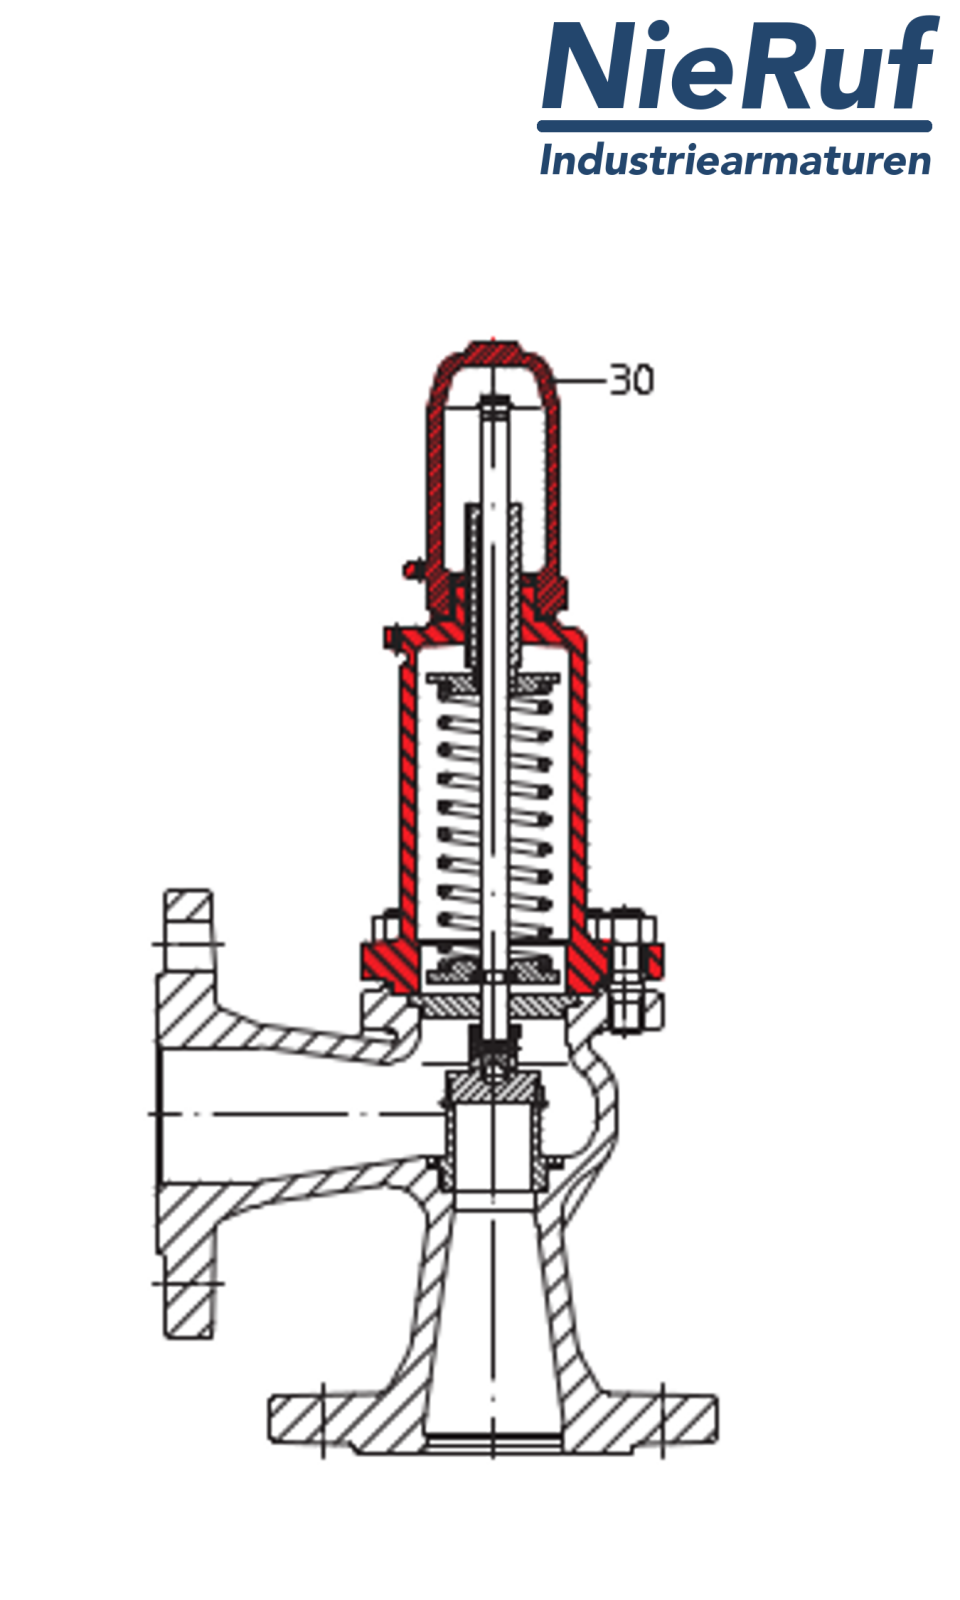 flange-safety valve DN40/DN40 SF0101, cast iron EN-JL1040 FPM, without lever